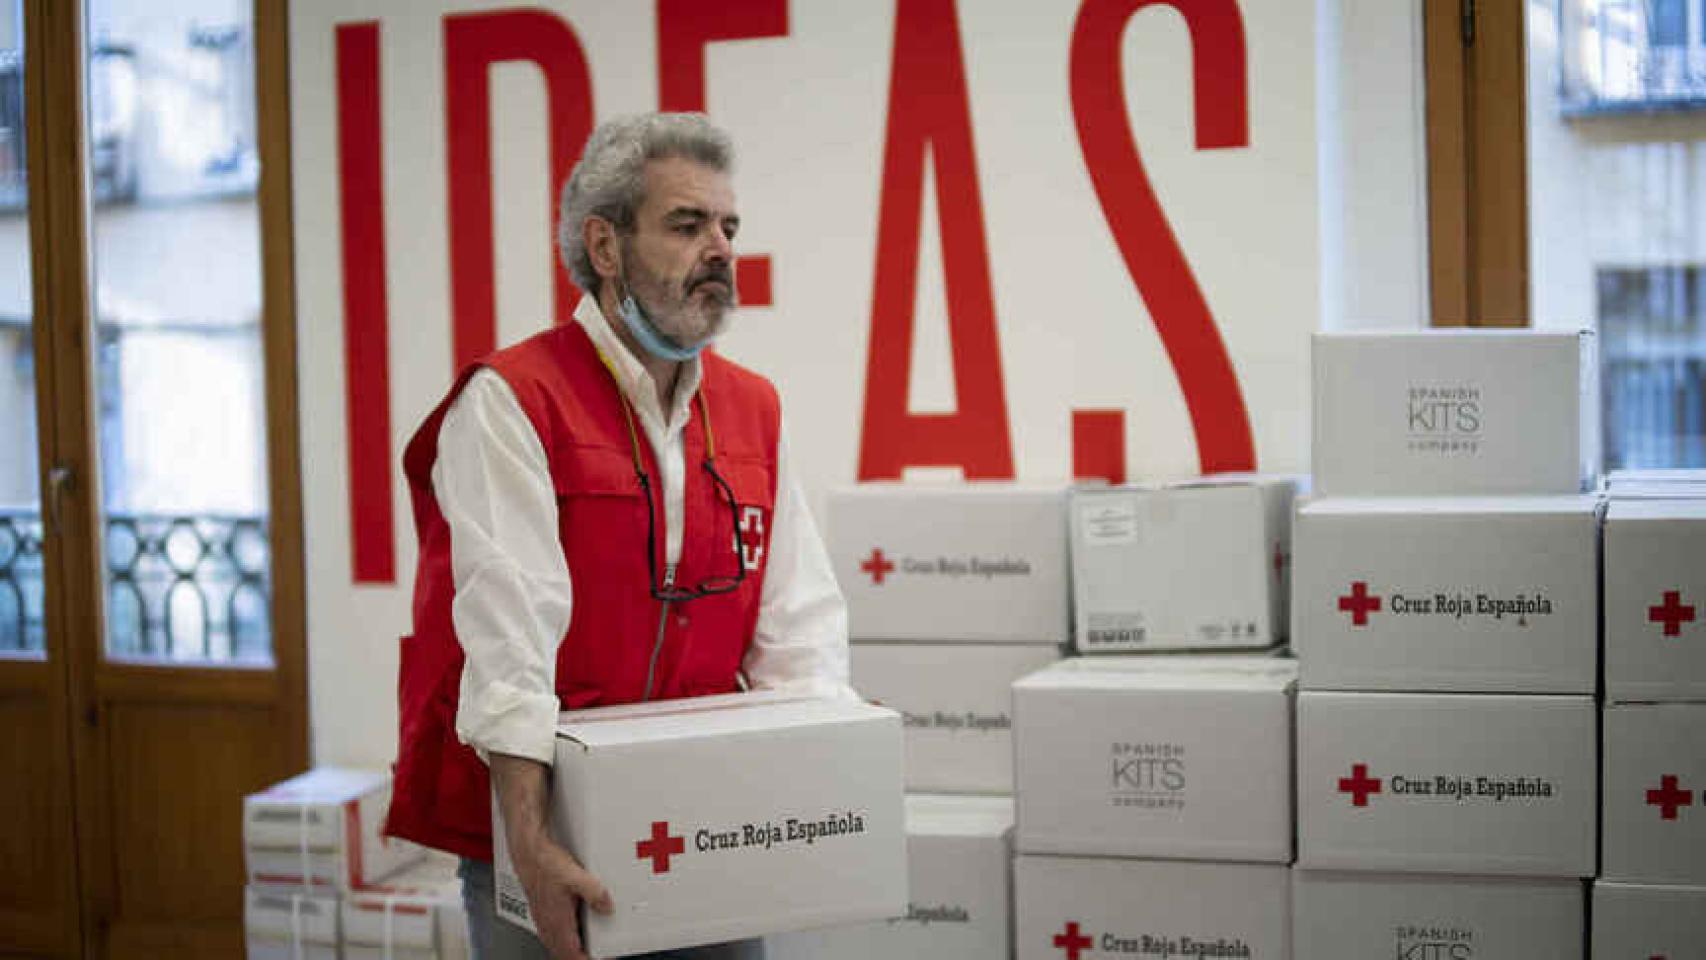 Nestlé entrega más de dos millones de raciones de comida infantil a la Cruz Roja